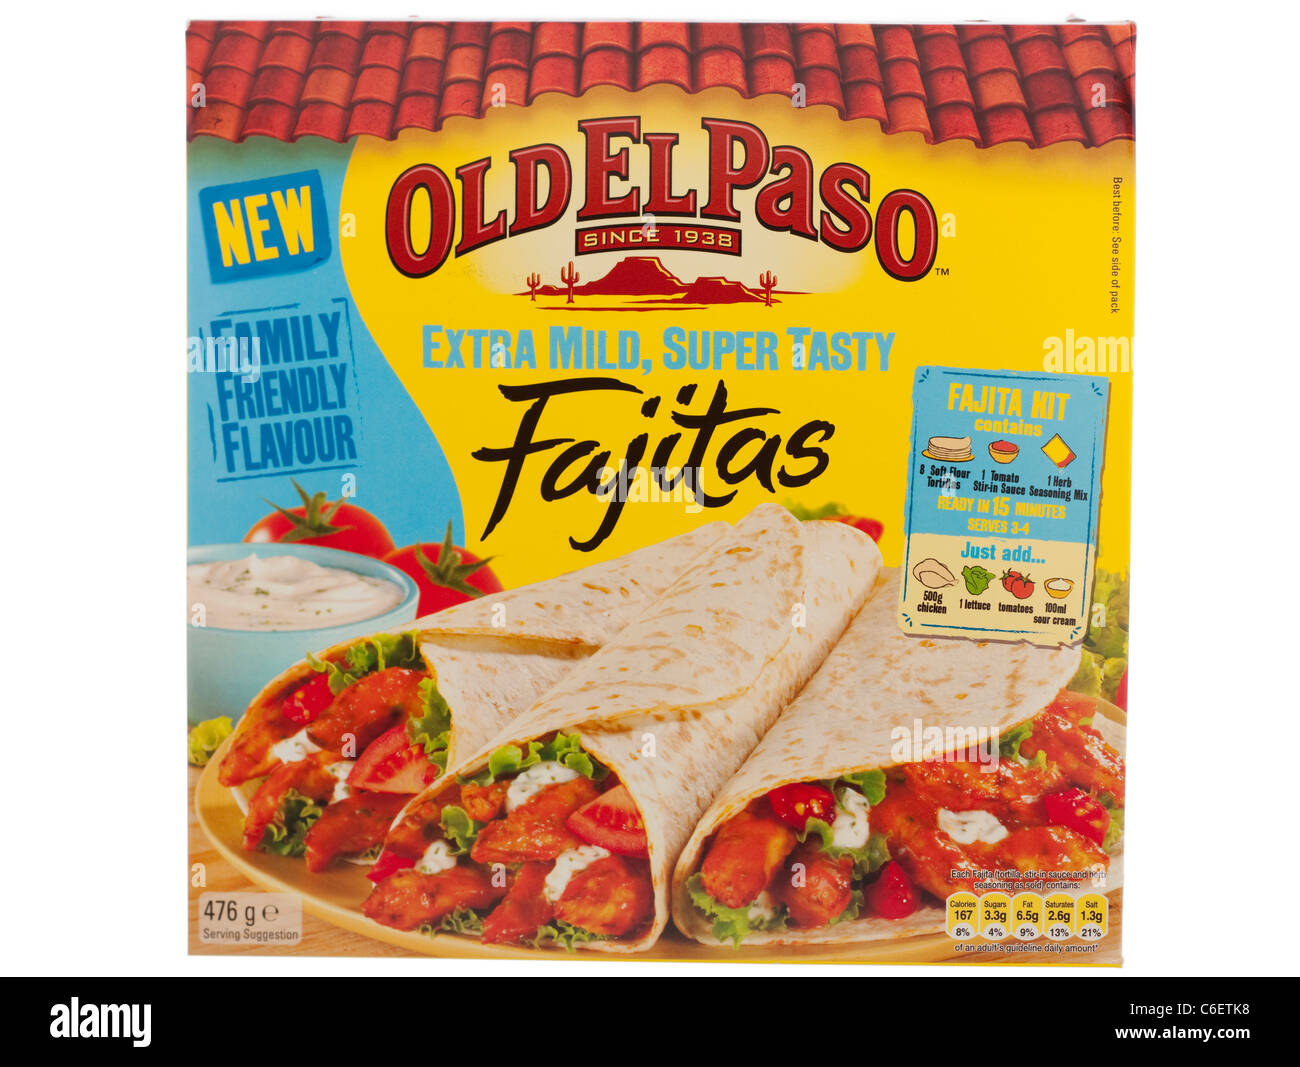 Box of Old El Paso extra mild Fajitas serving 3 or 4. Stock Photo